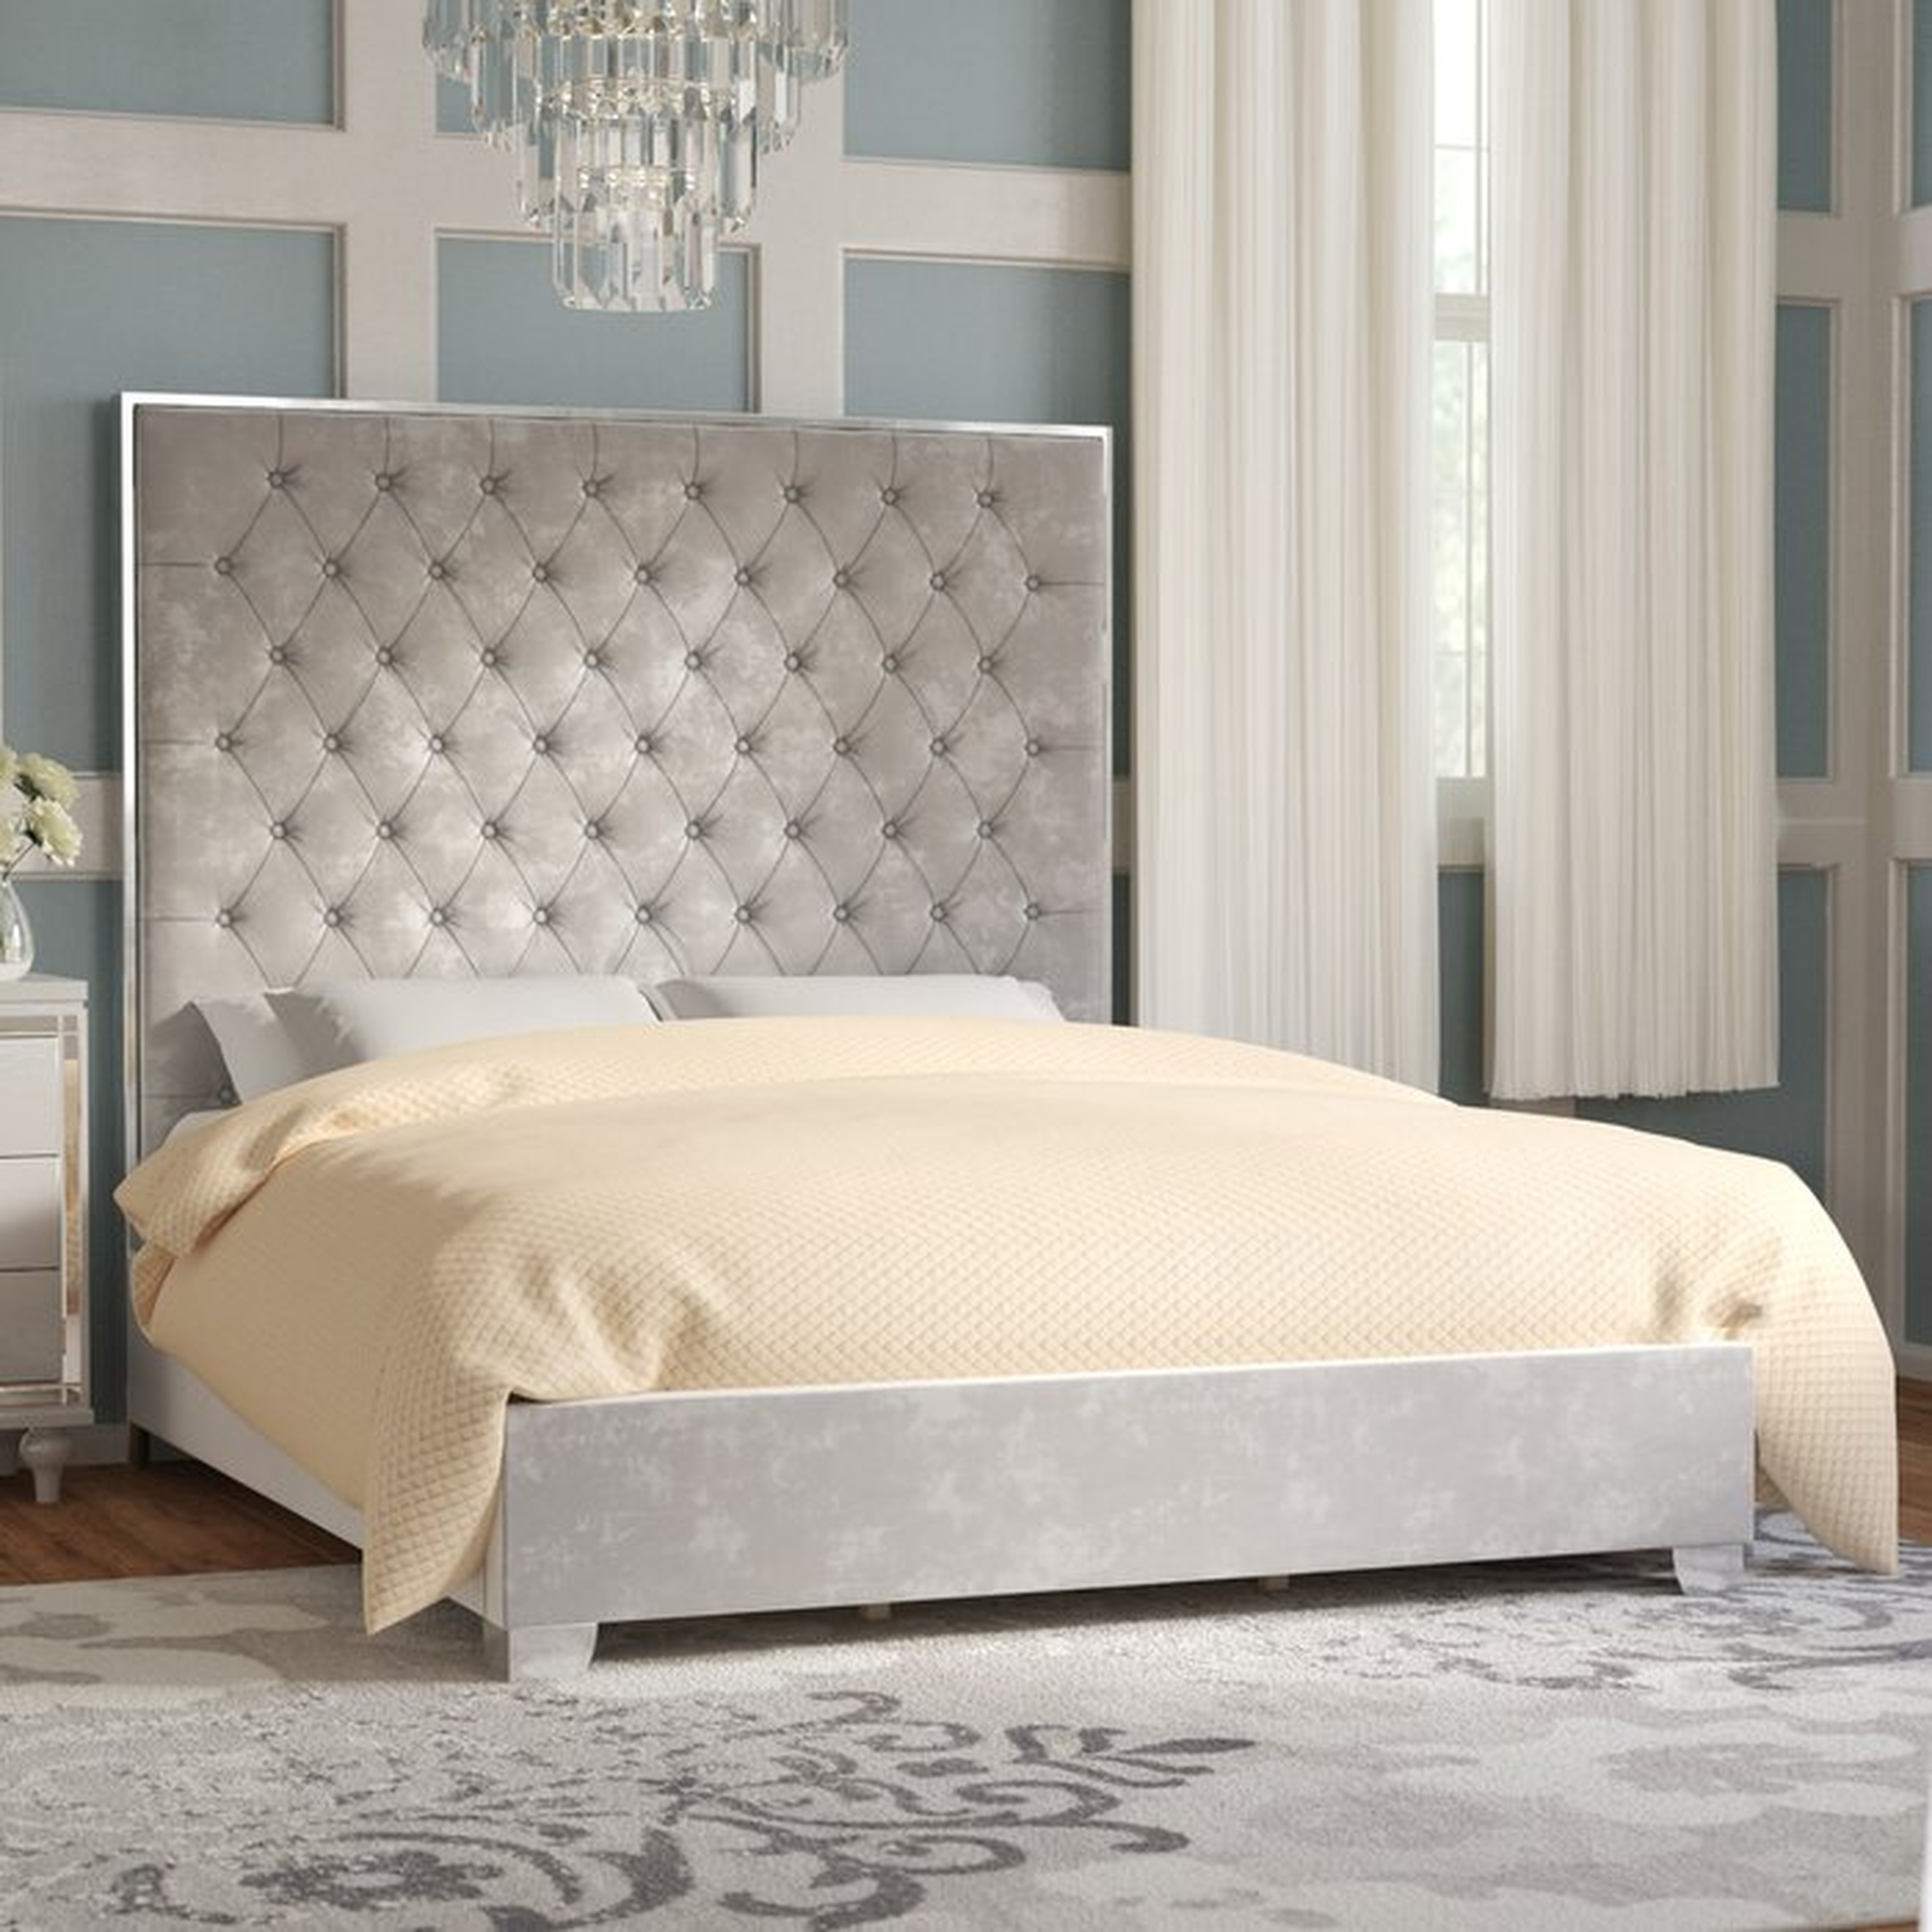 Lansford Tufted Low Profile Standard Bed - Wayfair